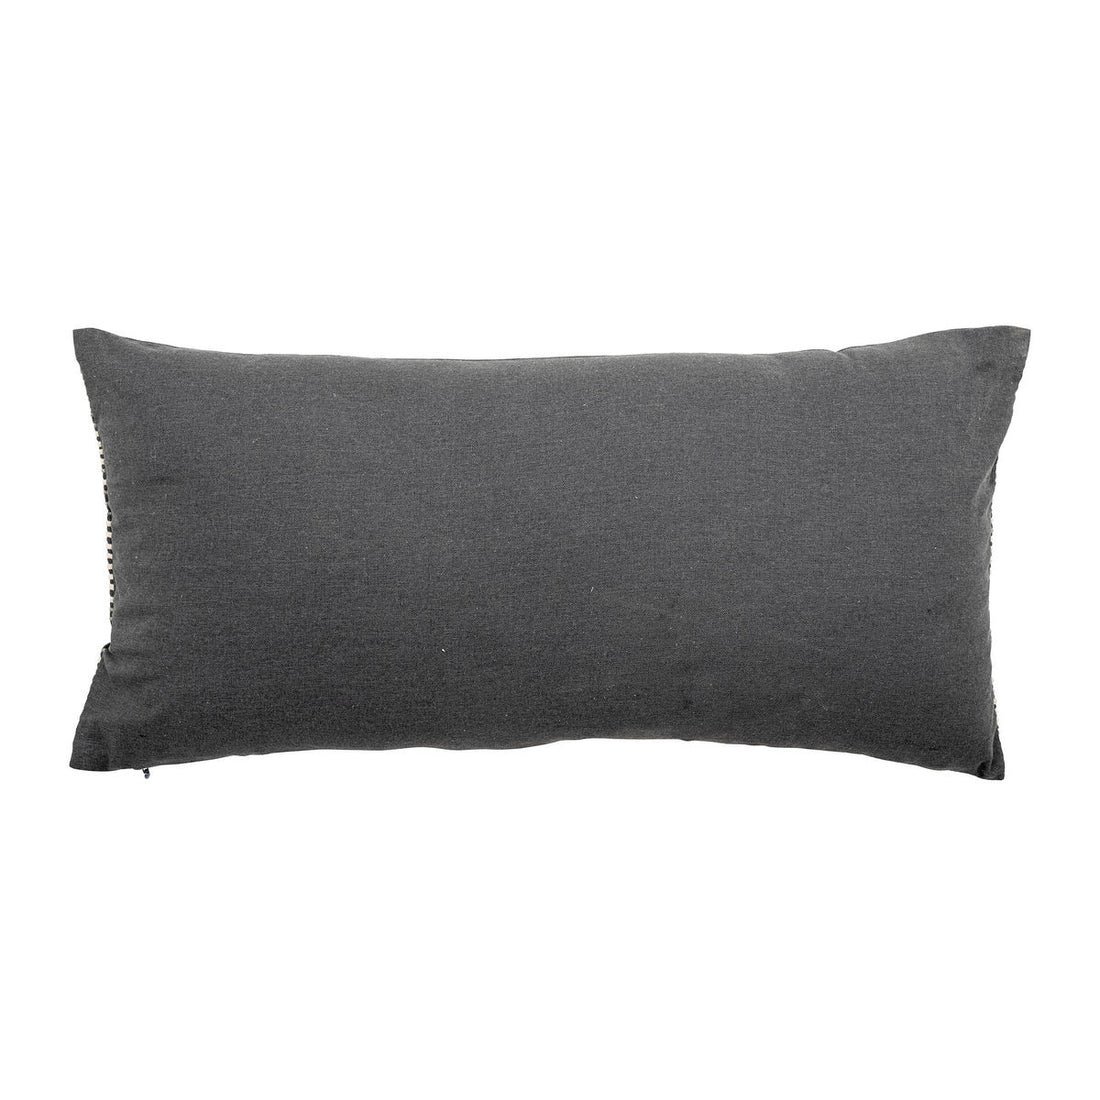 Bloomingville Brechia pillow, gray, cotton